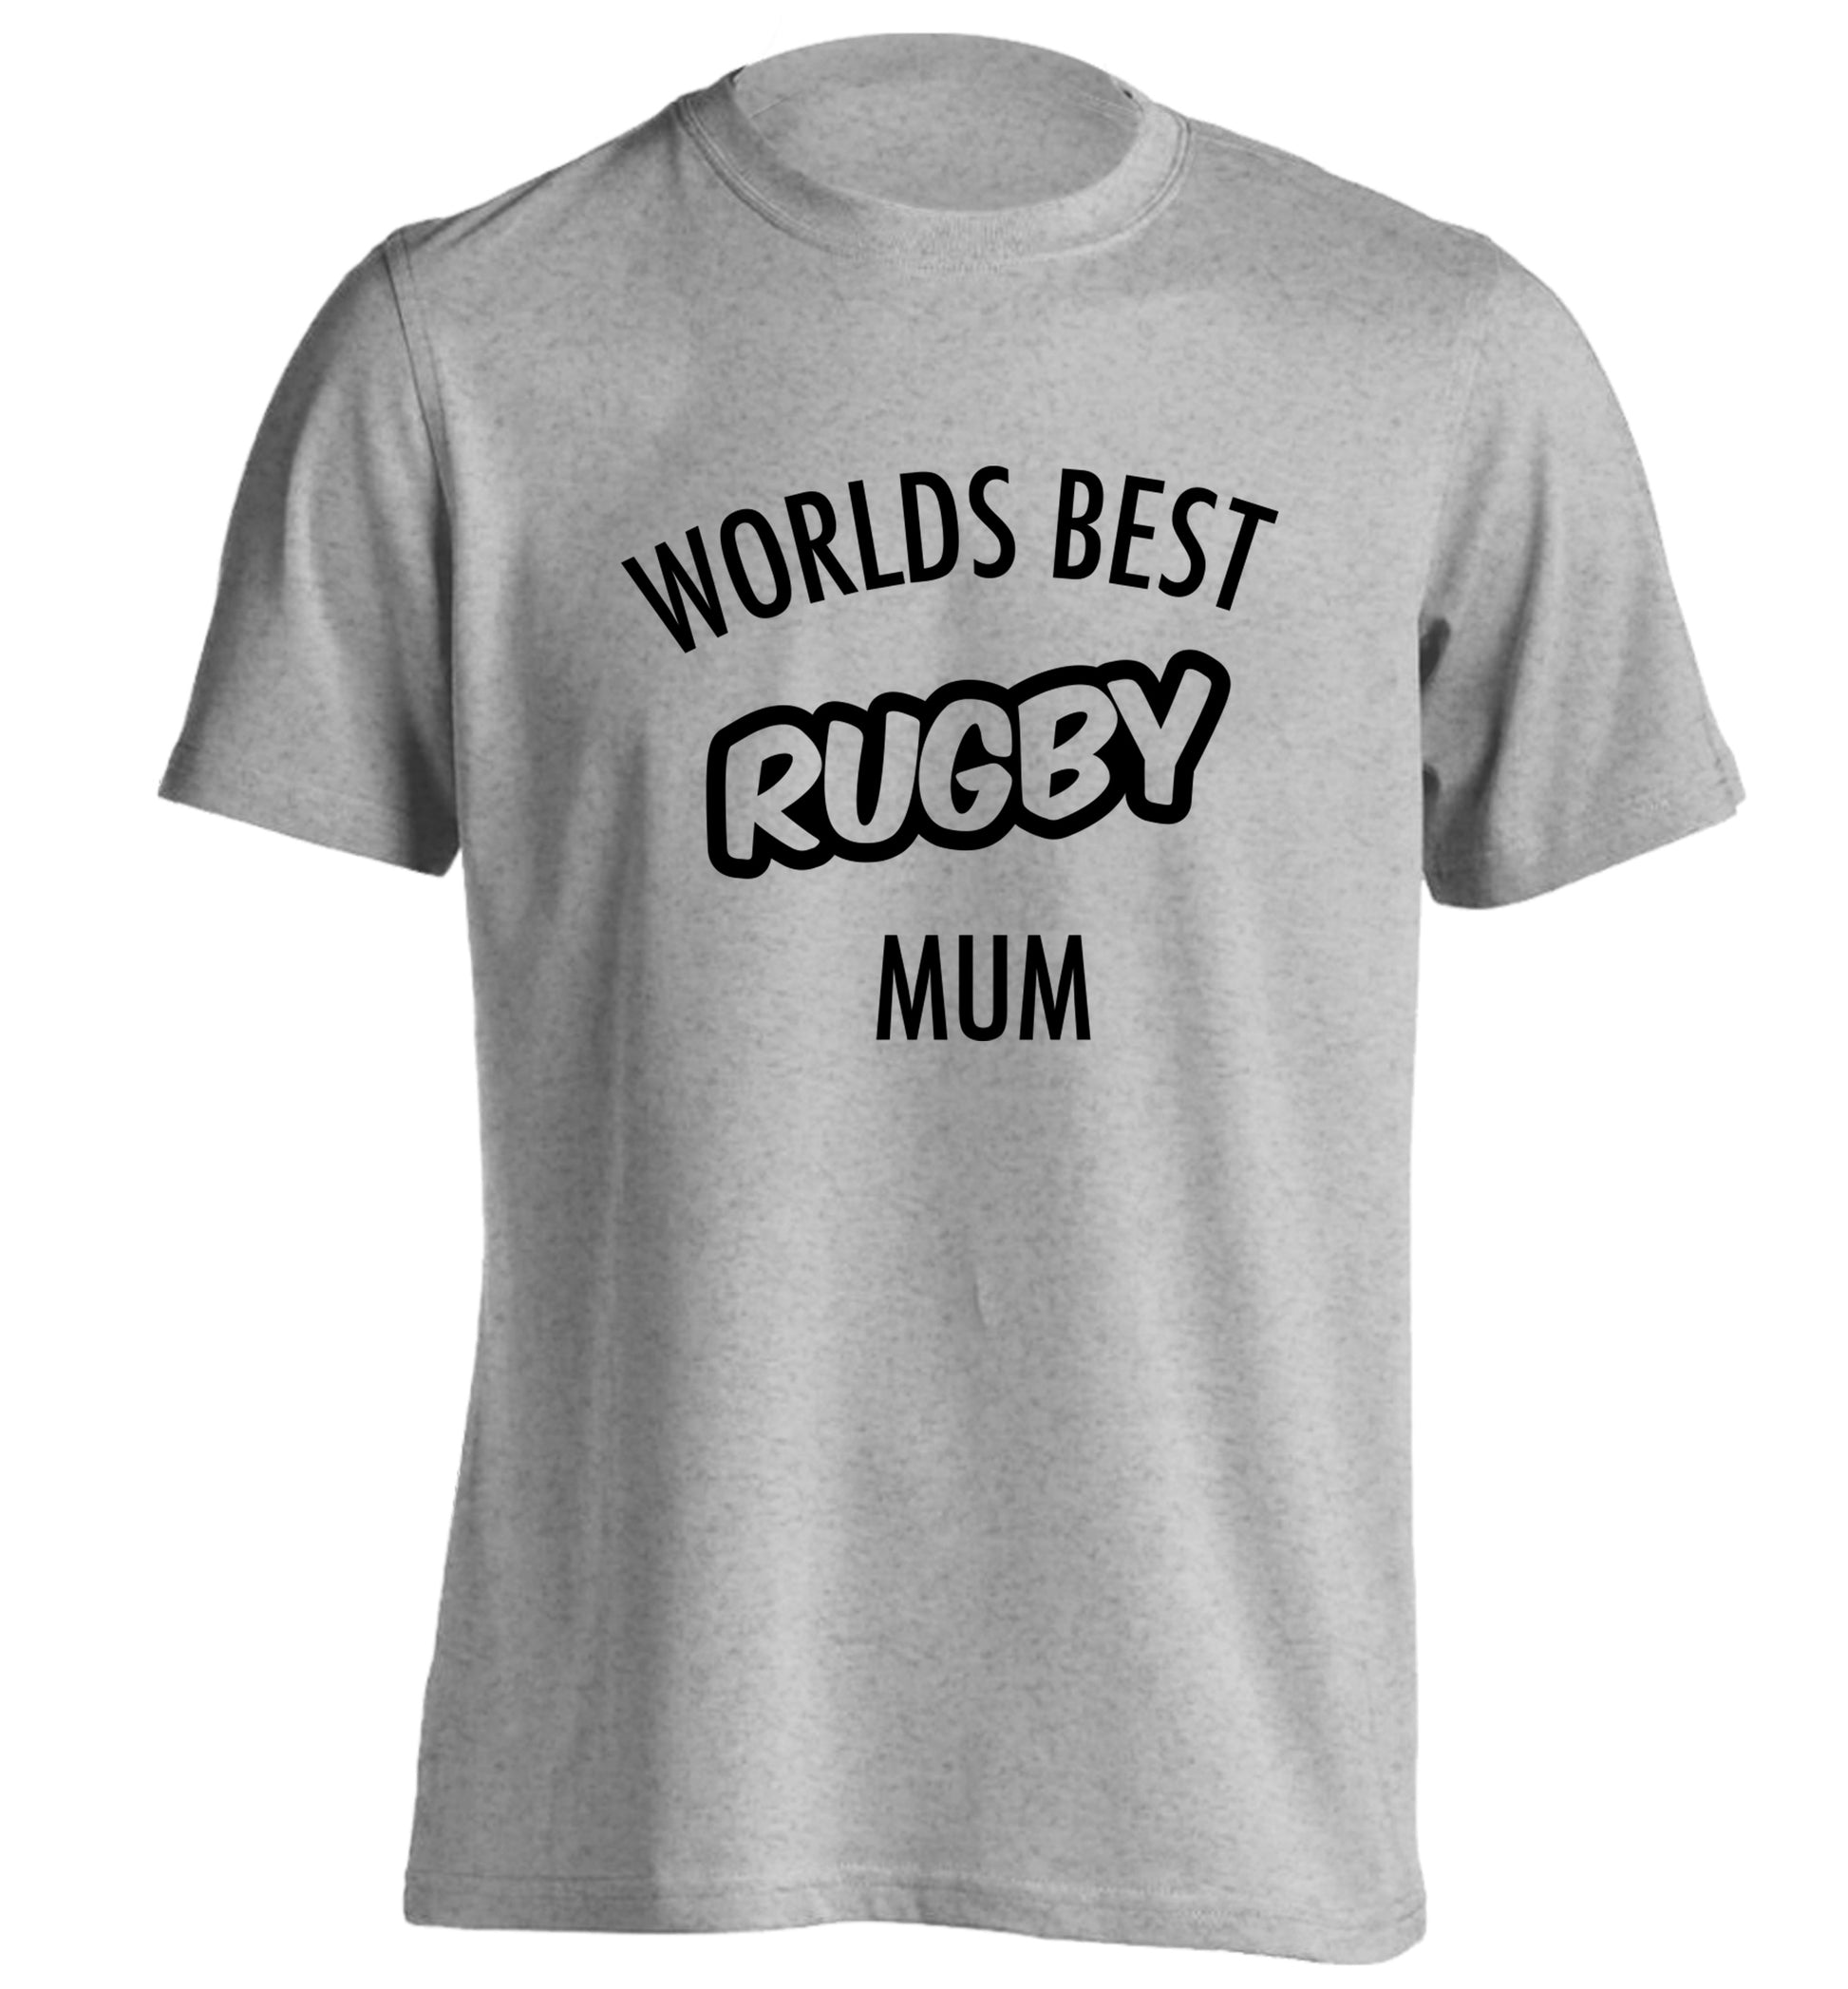 Worlds best rugby mum adults unisex grey Tshirt 2XL